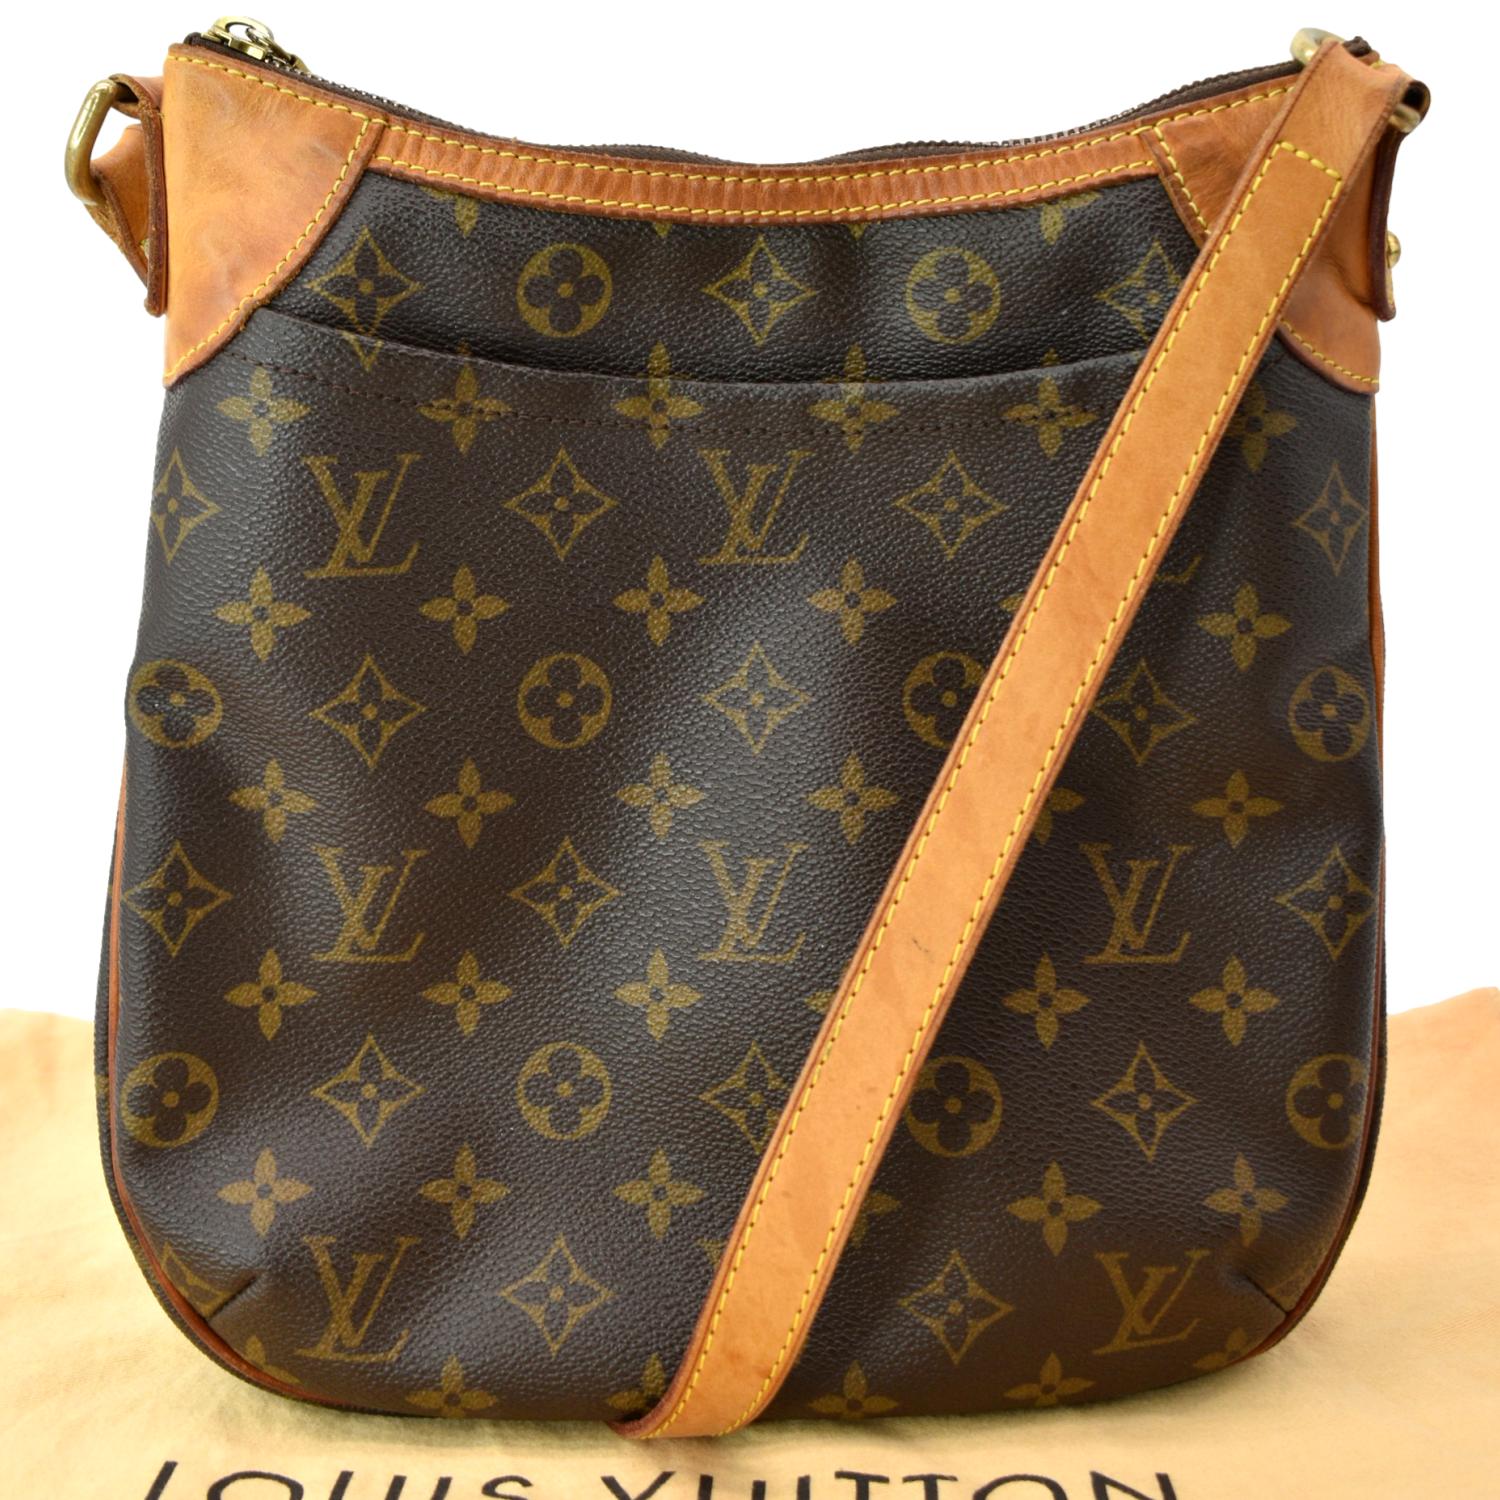 Products by Louis Vuitton: Odéon PM  Louis vuitton odeon, Louis vuitton  bag, Louis vuitton australia